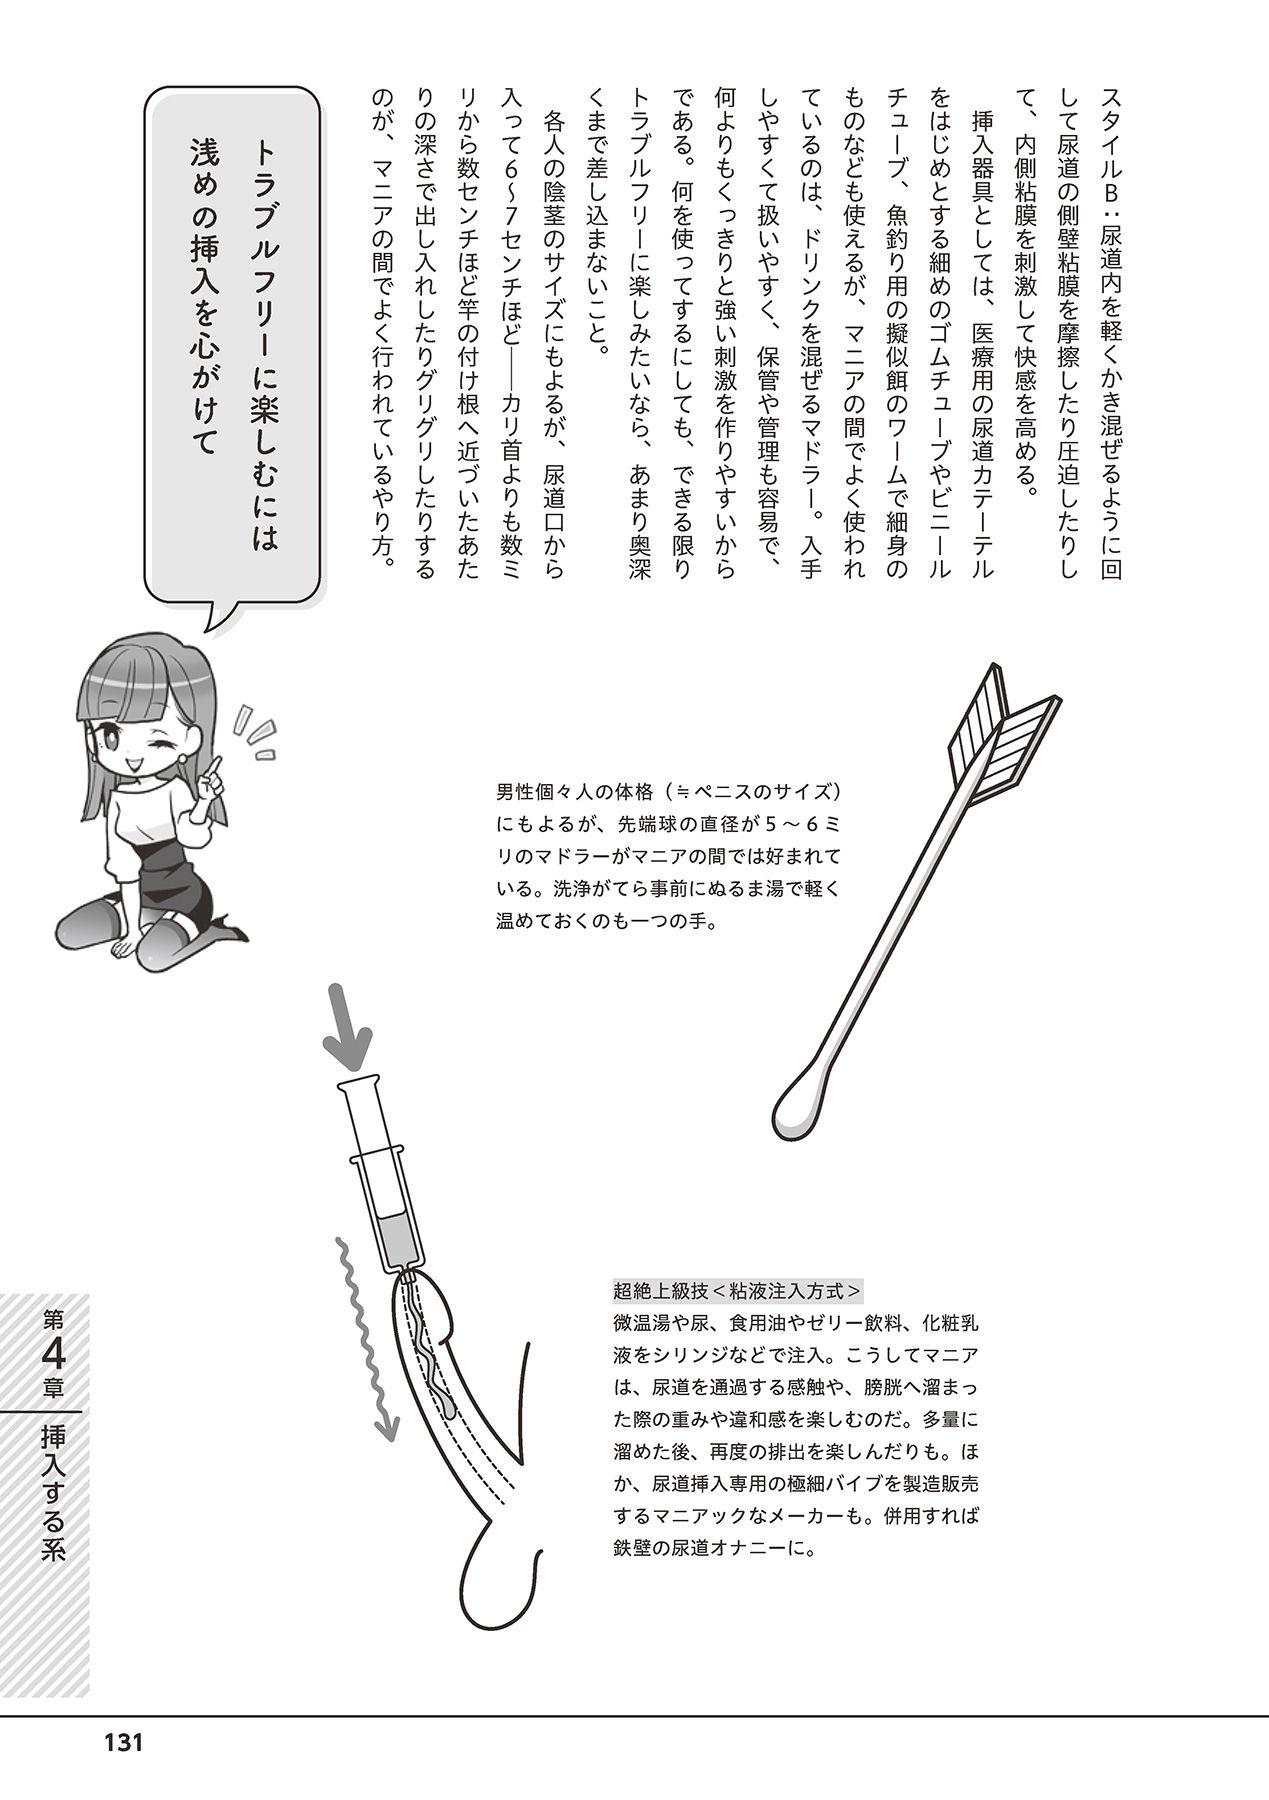 Otoko no Jii Onanie Kanzen Manual Illustration Han...... Onanie Play 132